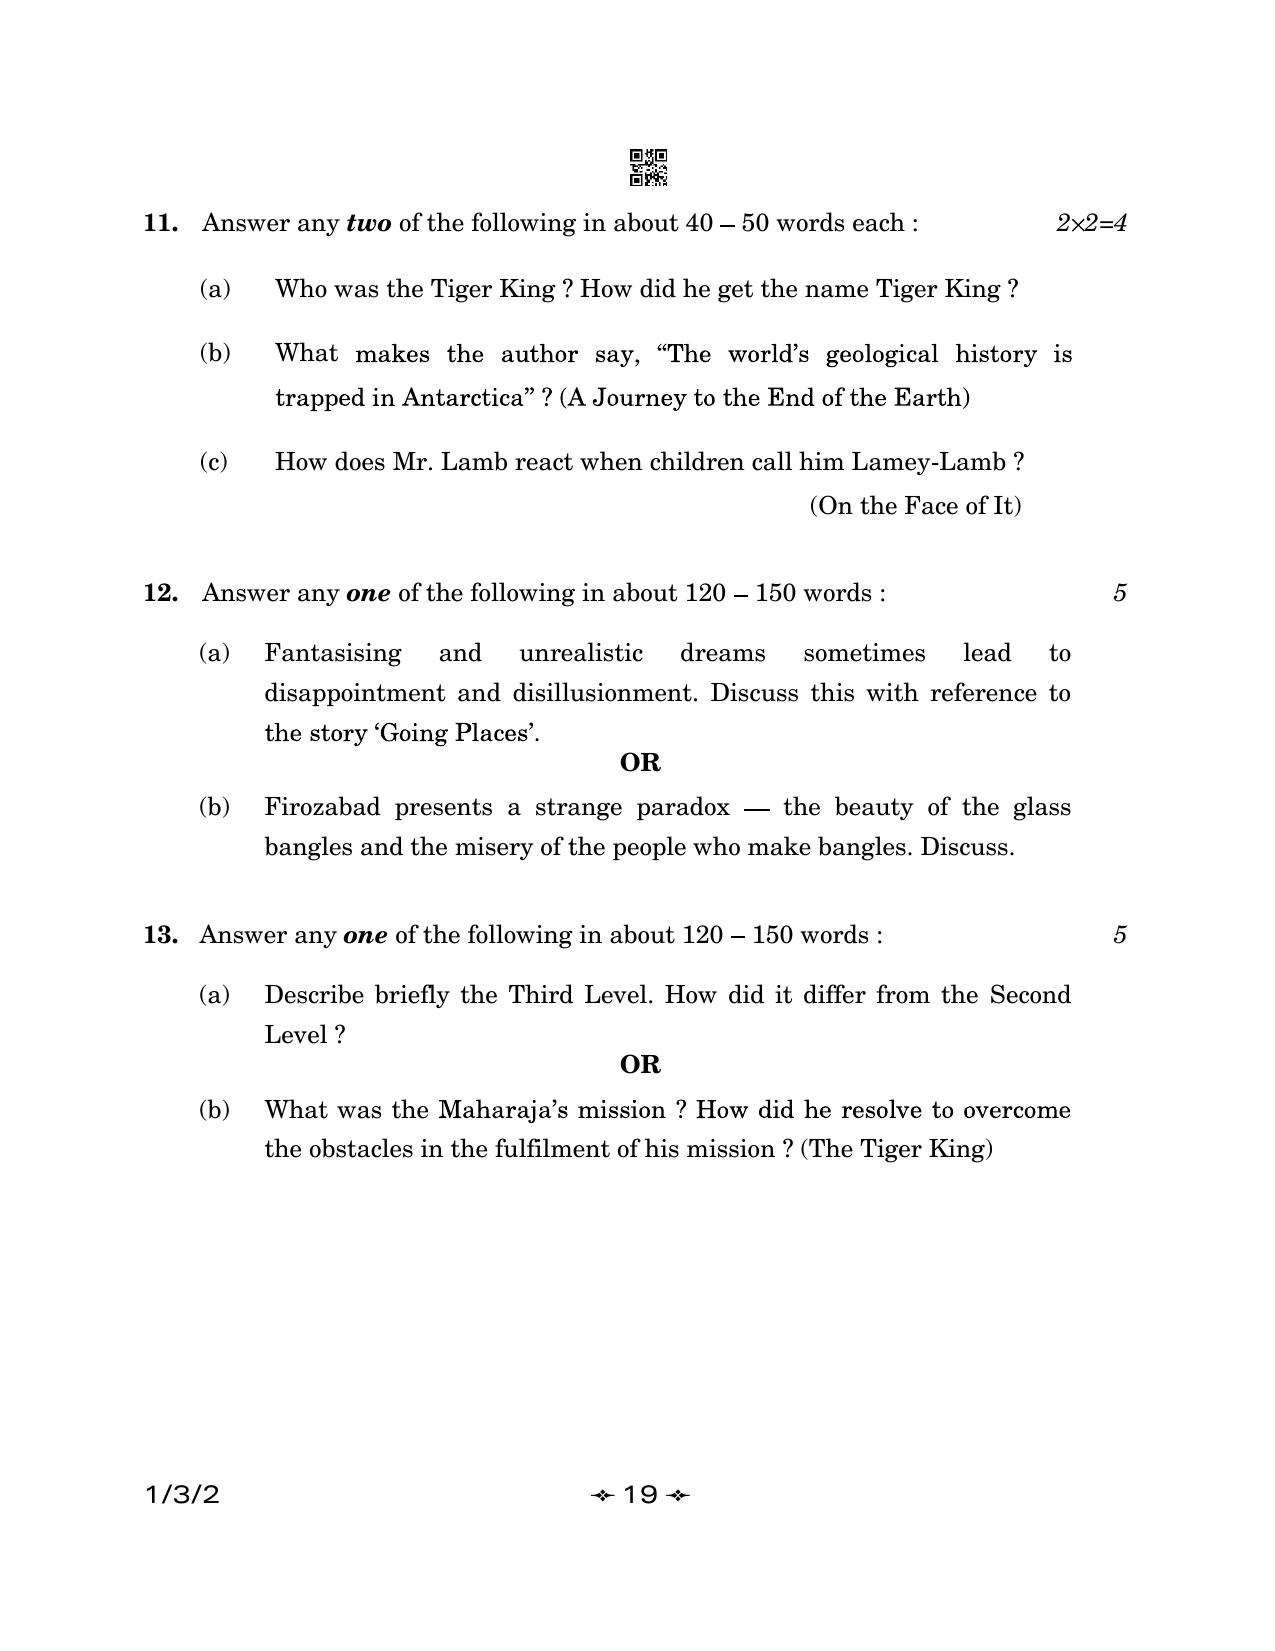 CBSE Class 12 1-3-2 English Core 2023 Question Paper - Page 19